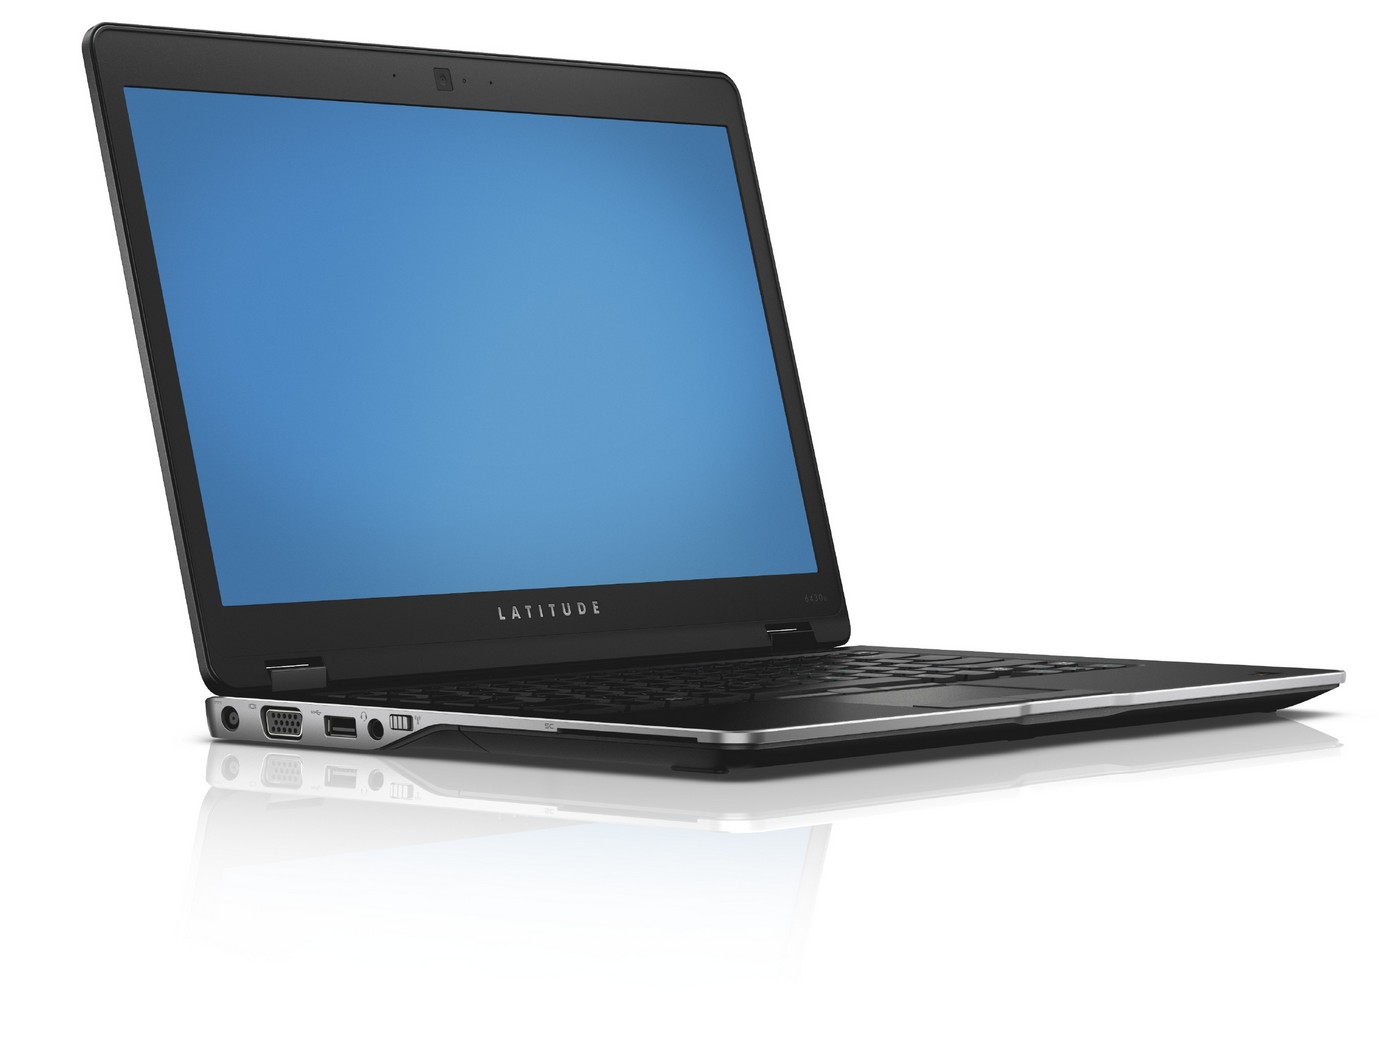 Ноутбук Dell 6430 Цена Характеристики